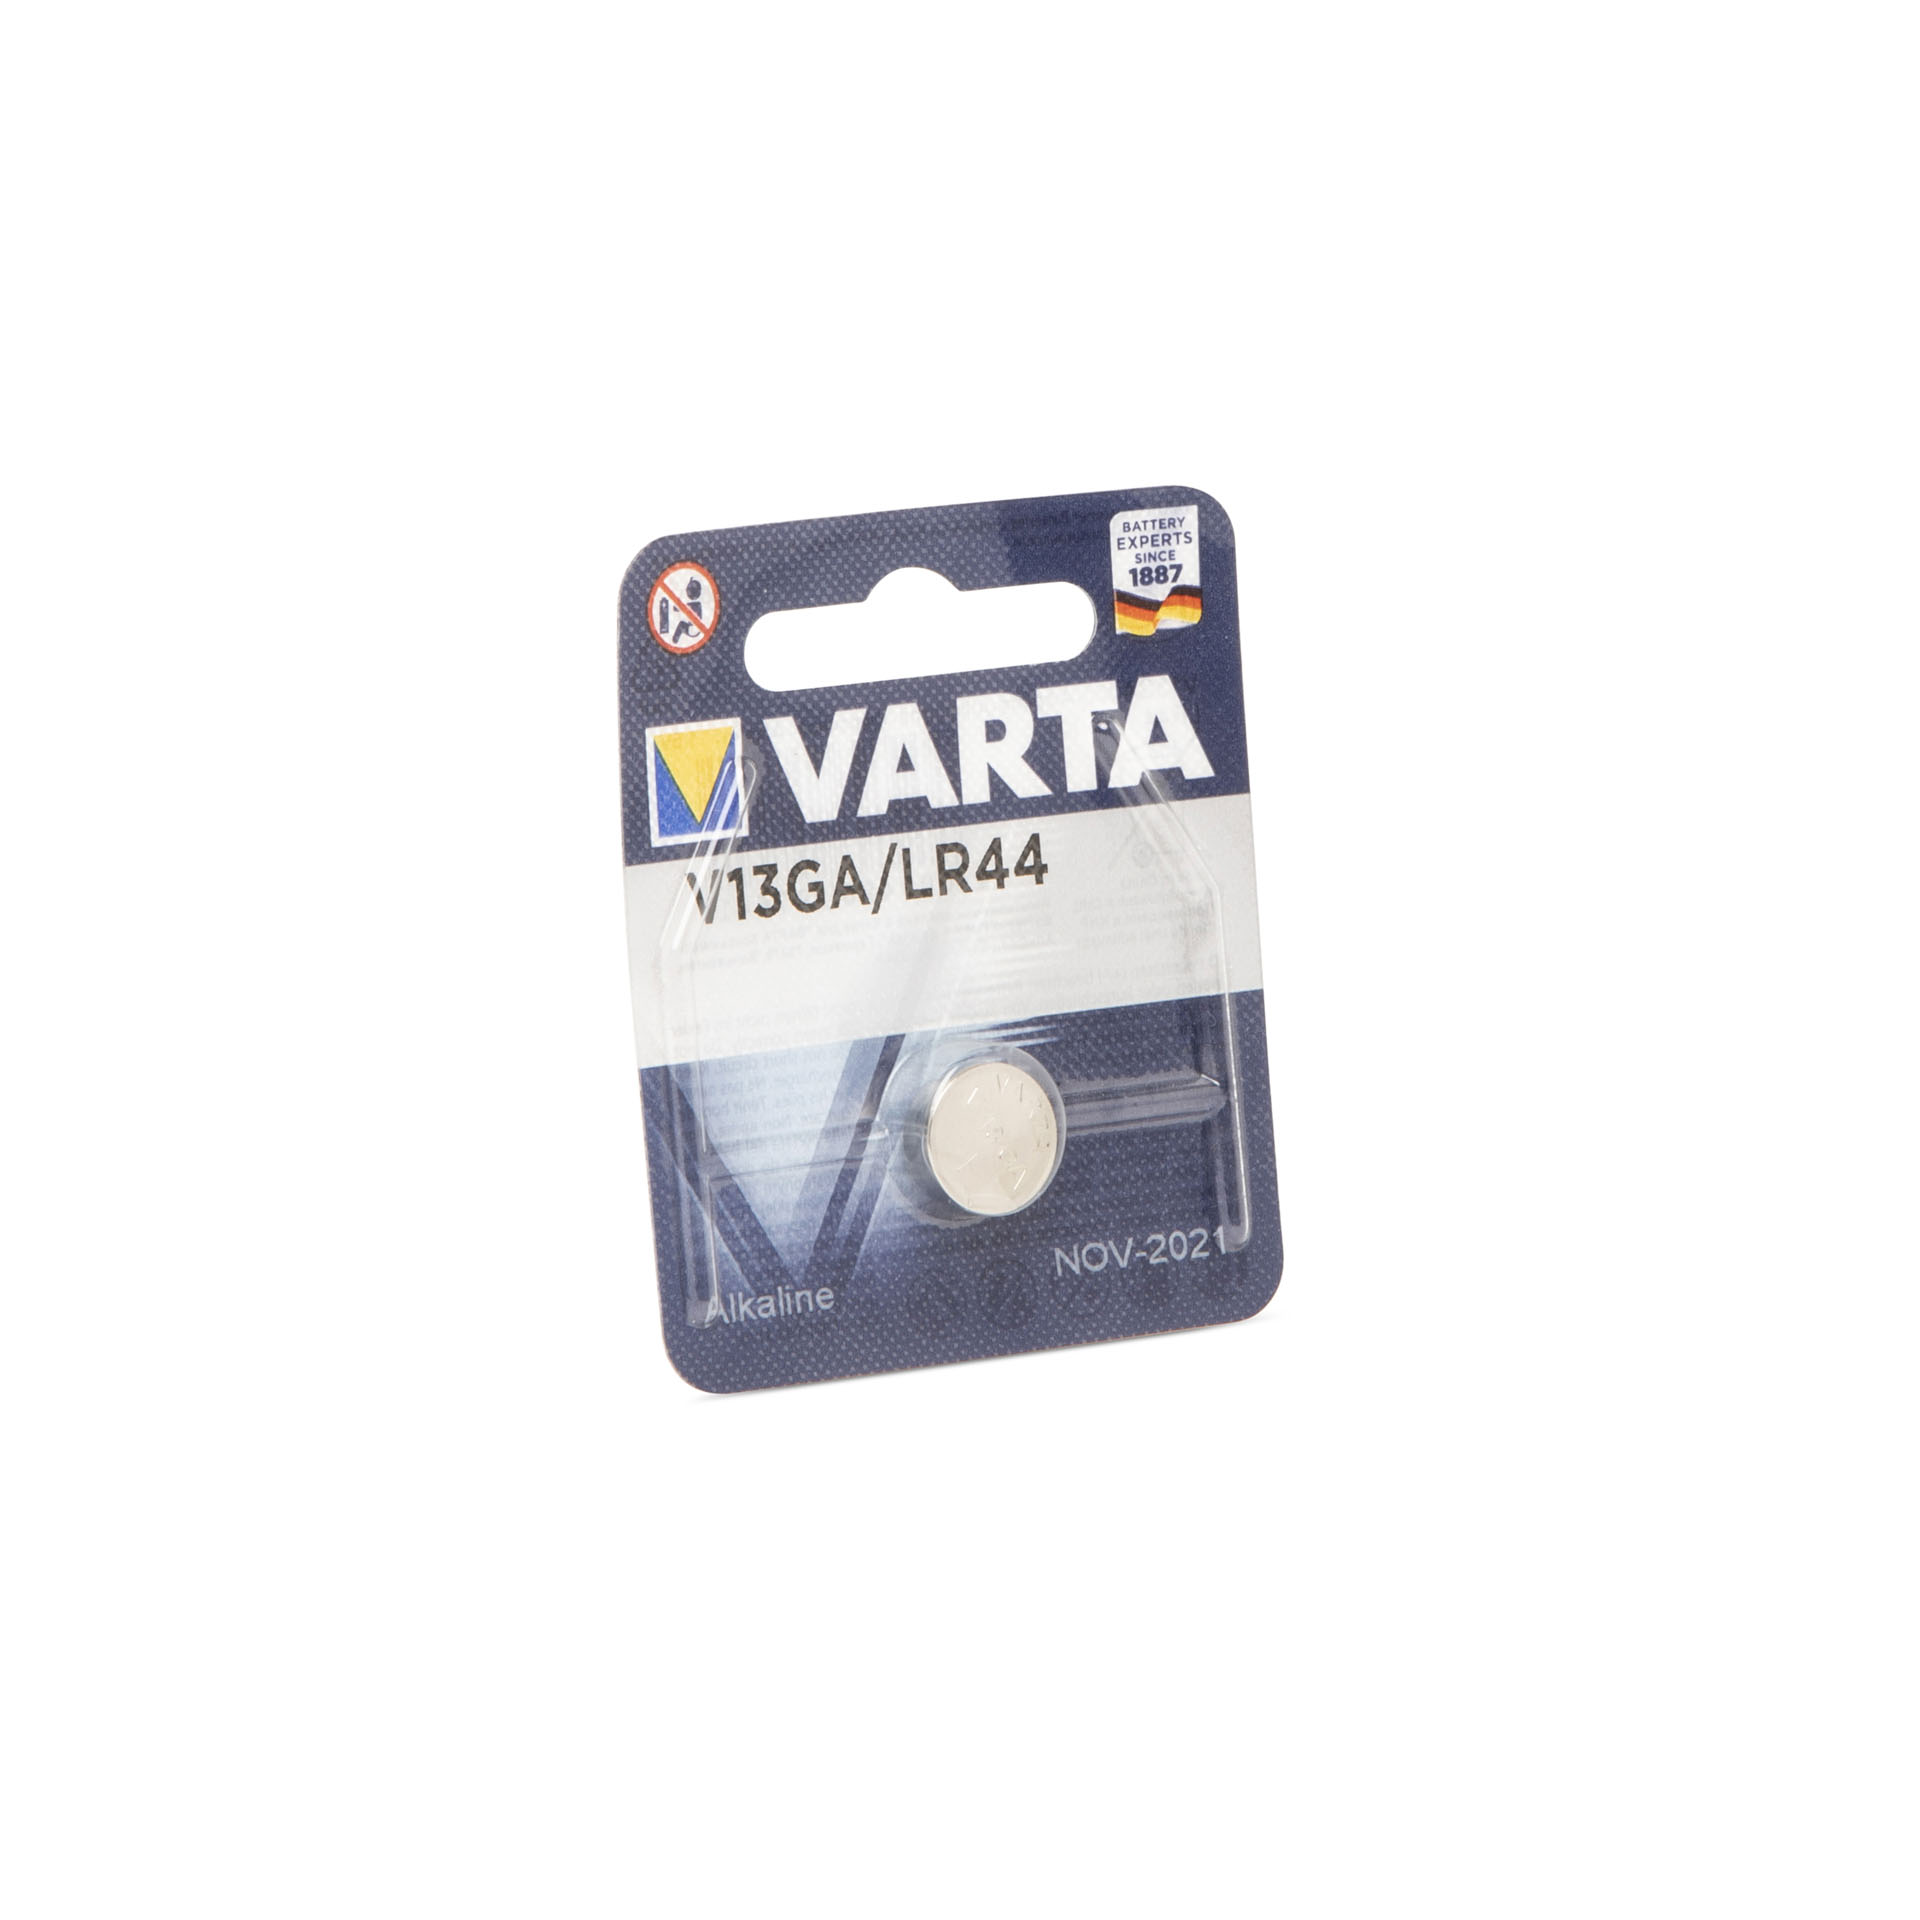 Batteria Varta V13ga, , large